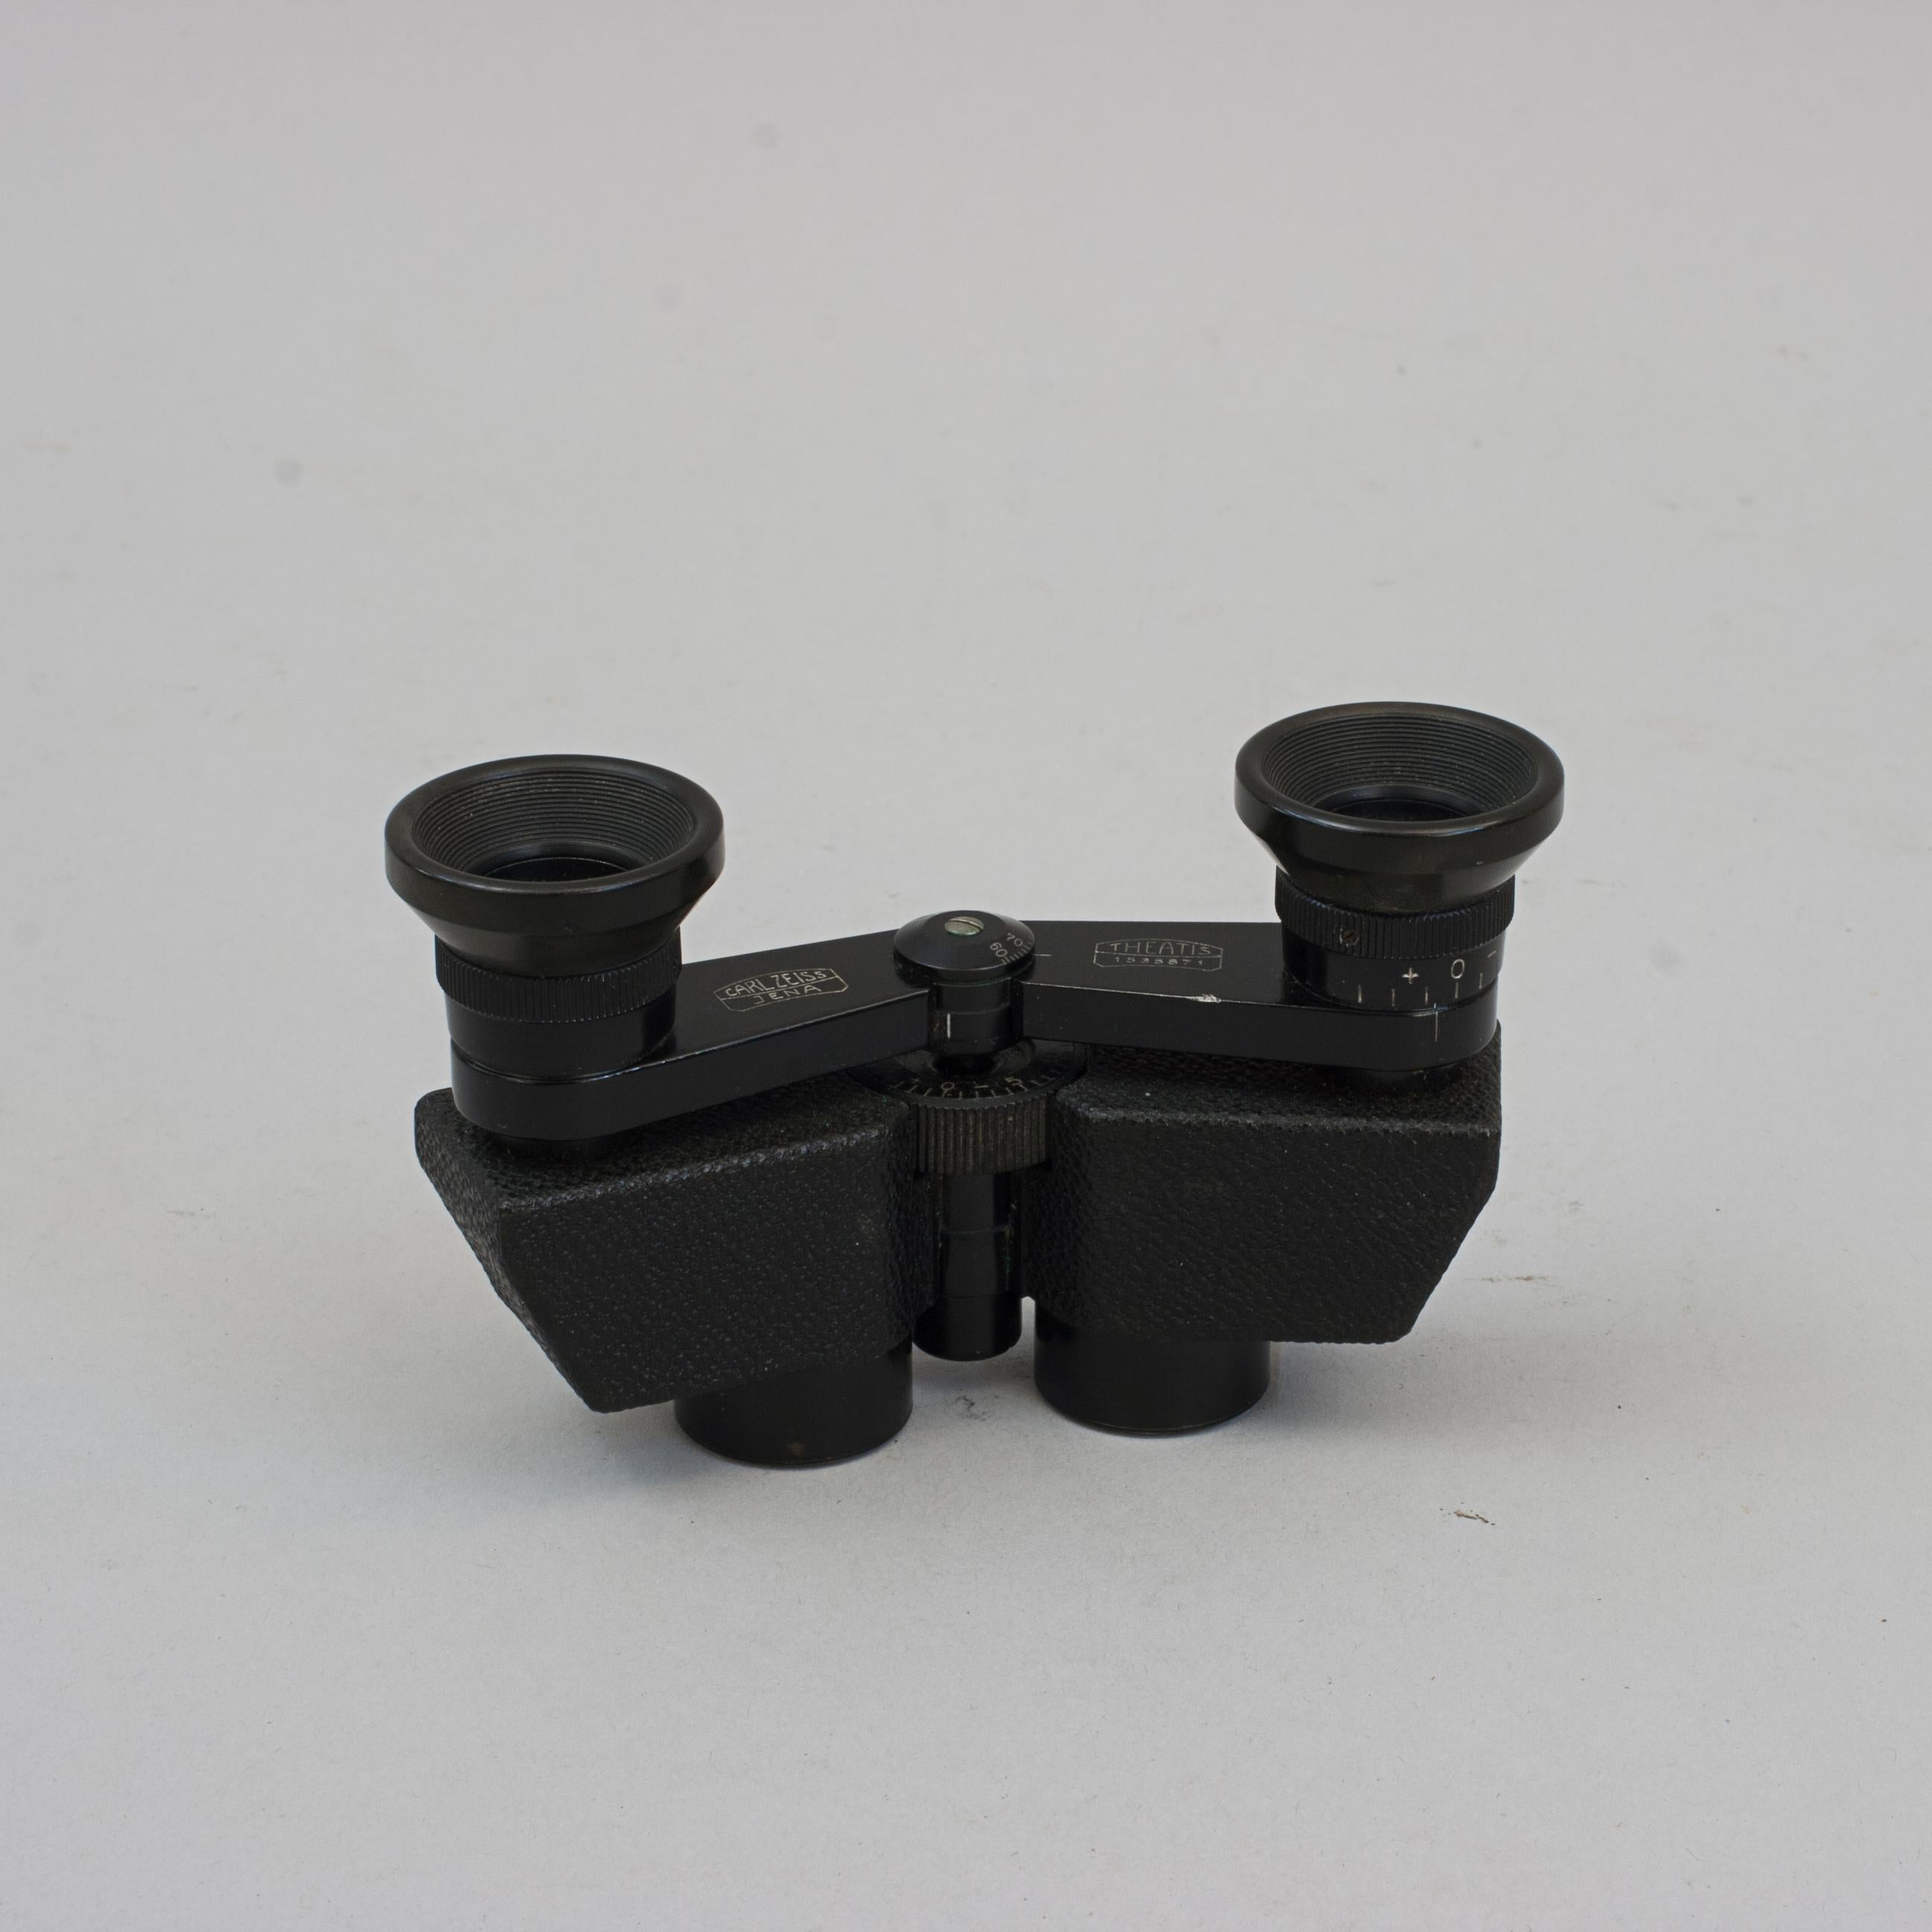 Carl Zeiss Binoculars 3.5 X 15, in Leather Case For Sale 2